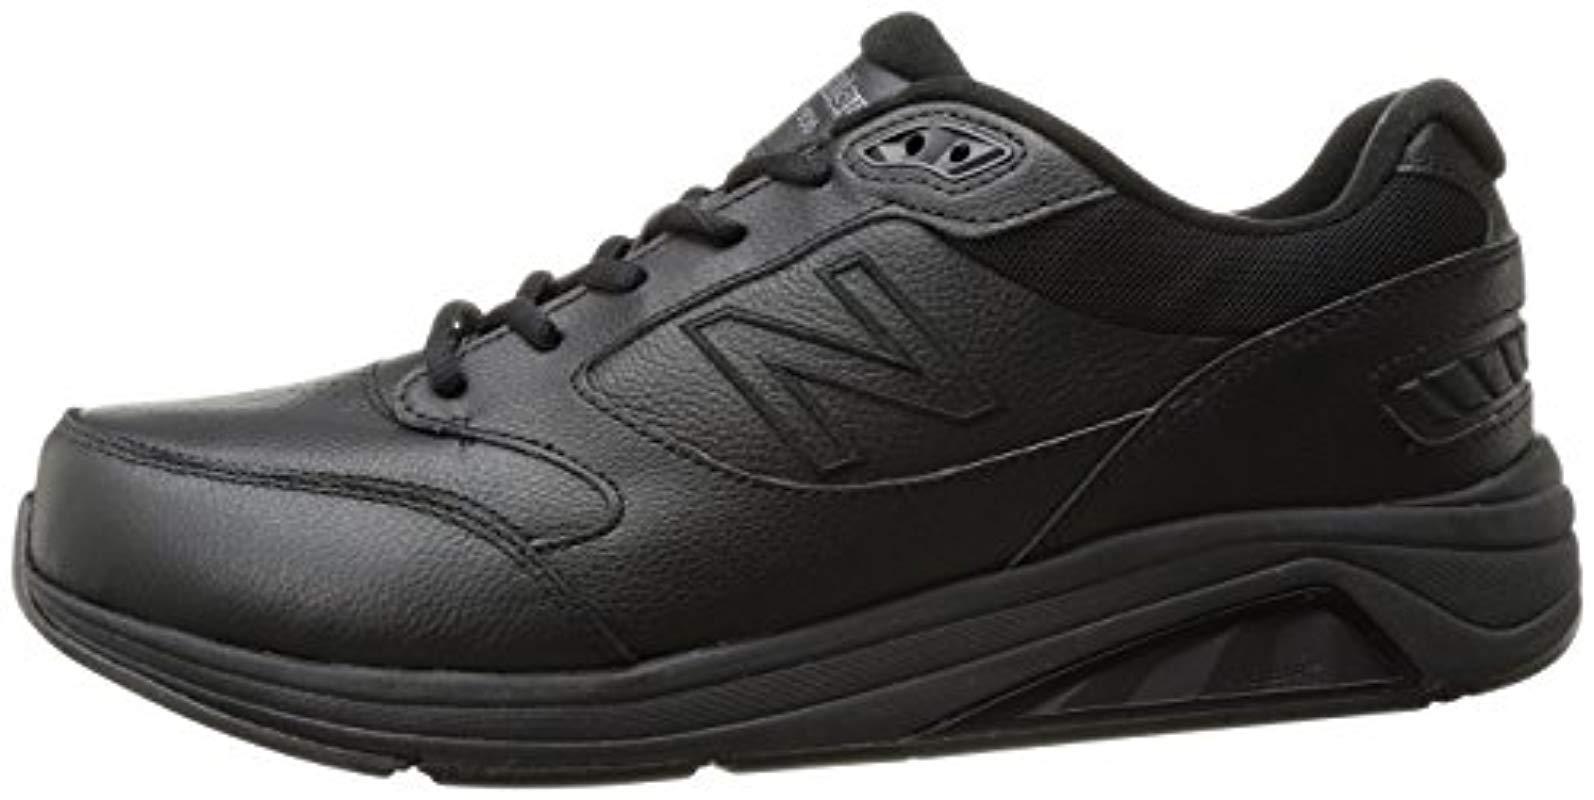 New Balance Leather S 928v3 Walking Shoe Walking Shoe in Black/Black ...